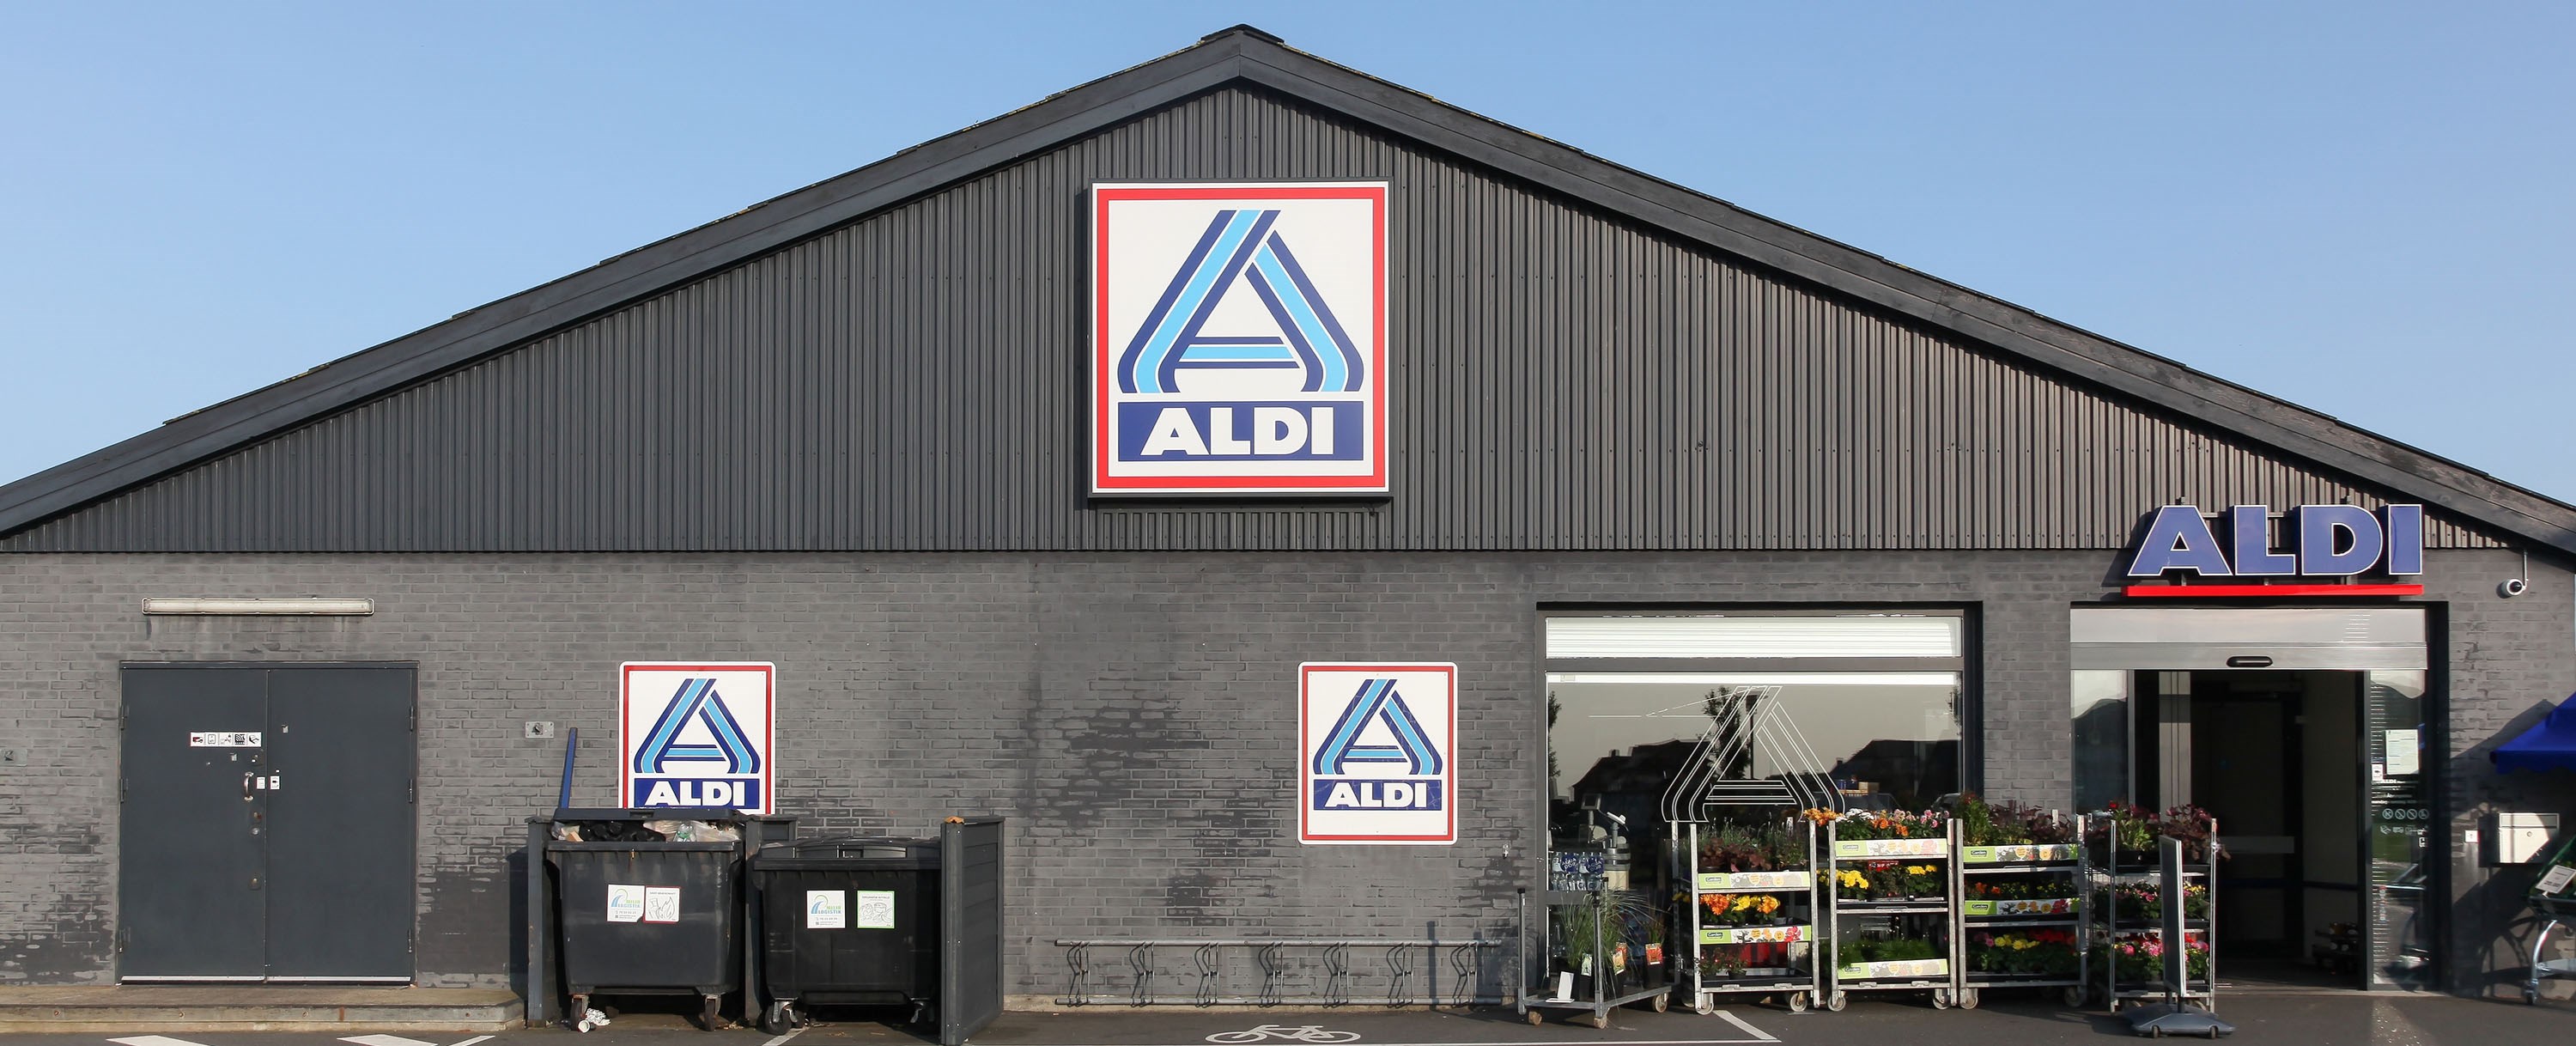 Aldi store in Denmark. Photo: ricochet64/Shutterstock